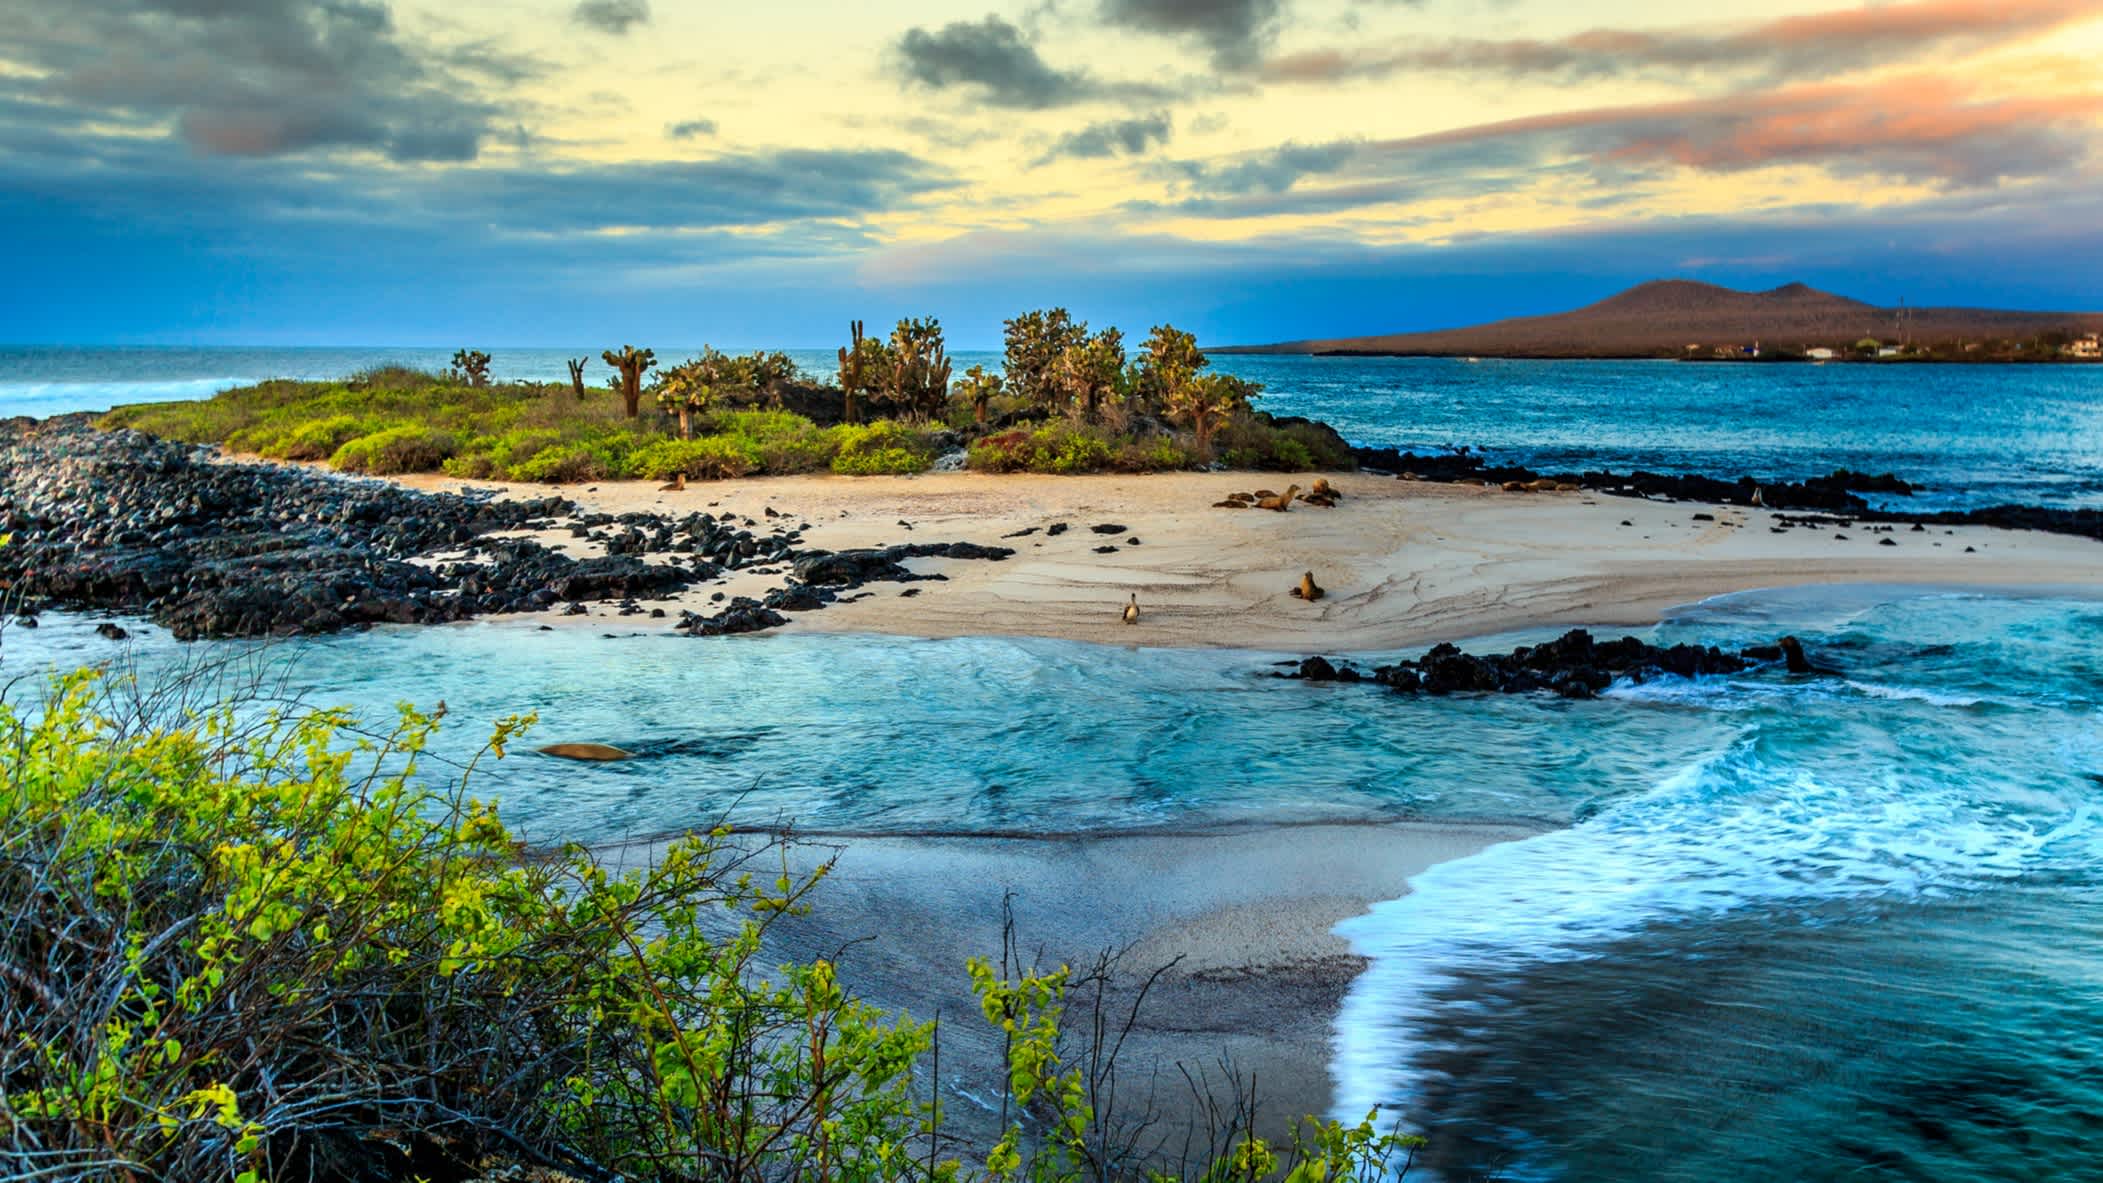 Der Meerblick auf den Galapagosinseln bei Sonnenuntergang. 